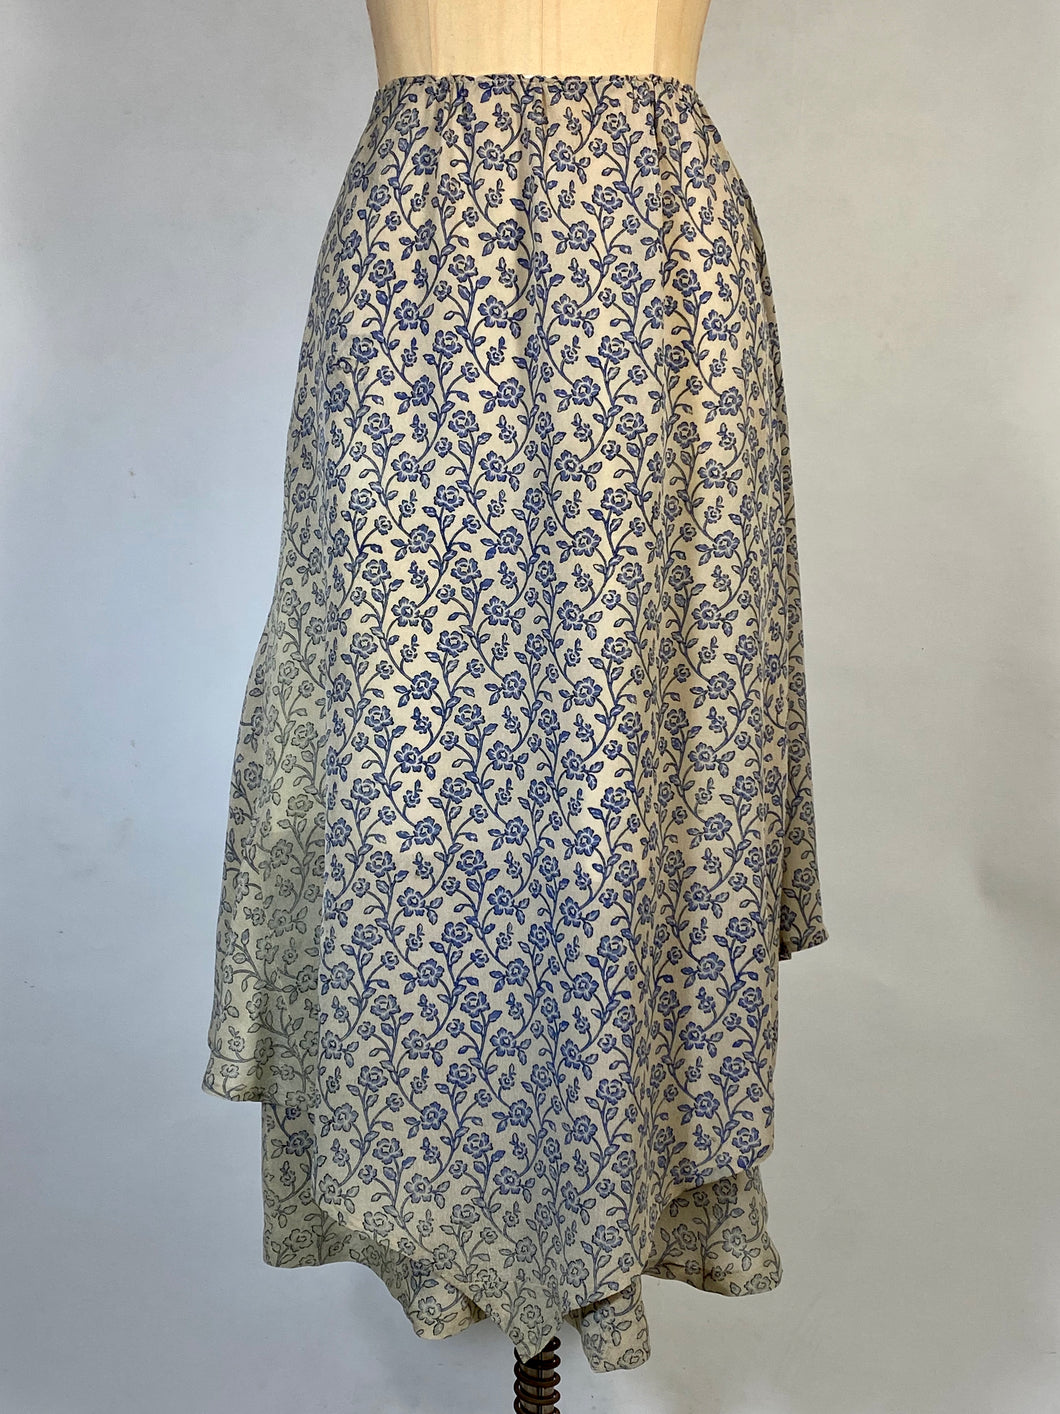 Edwardian 1900’s-1910’s silk 2-tier modified skirt with cornflowers